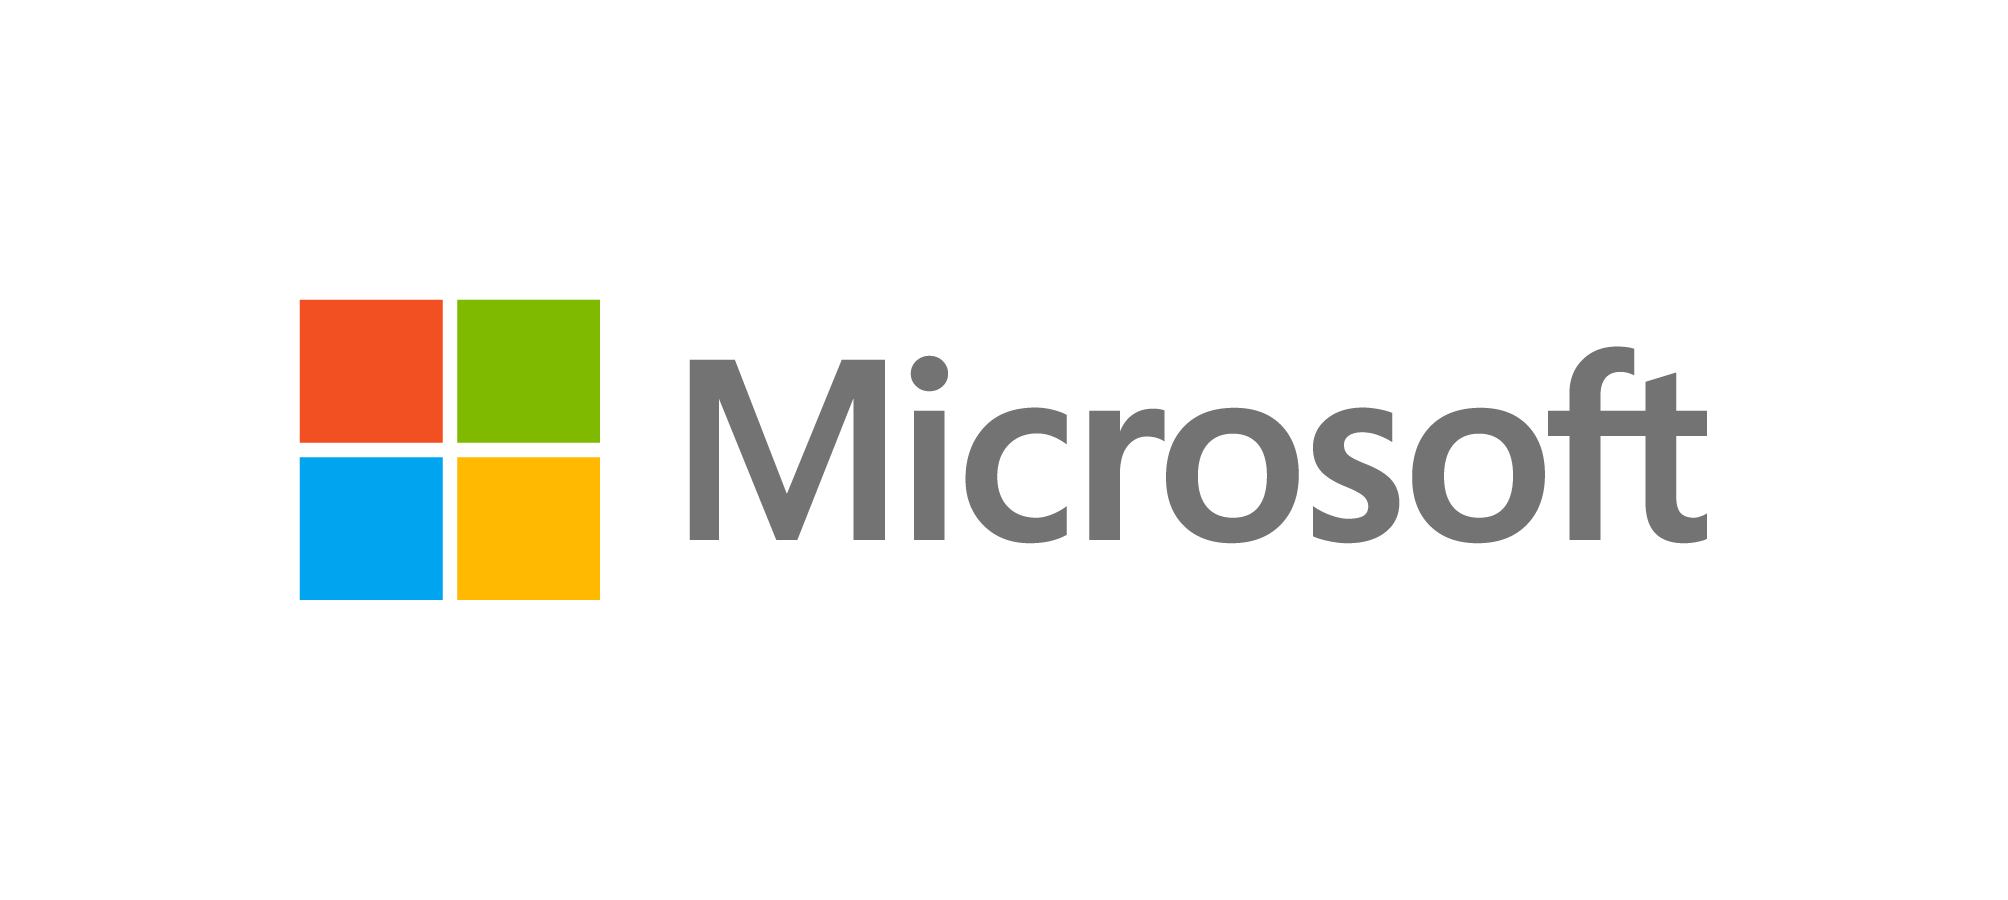 Microsoft logo rgb c gray